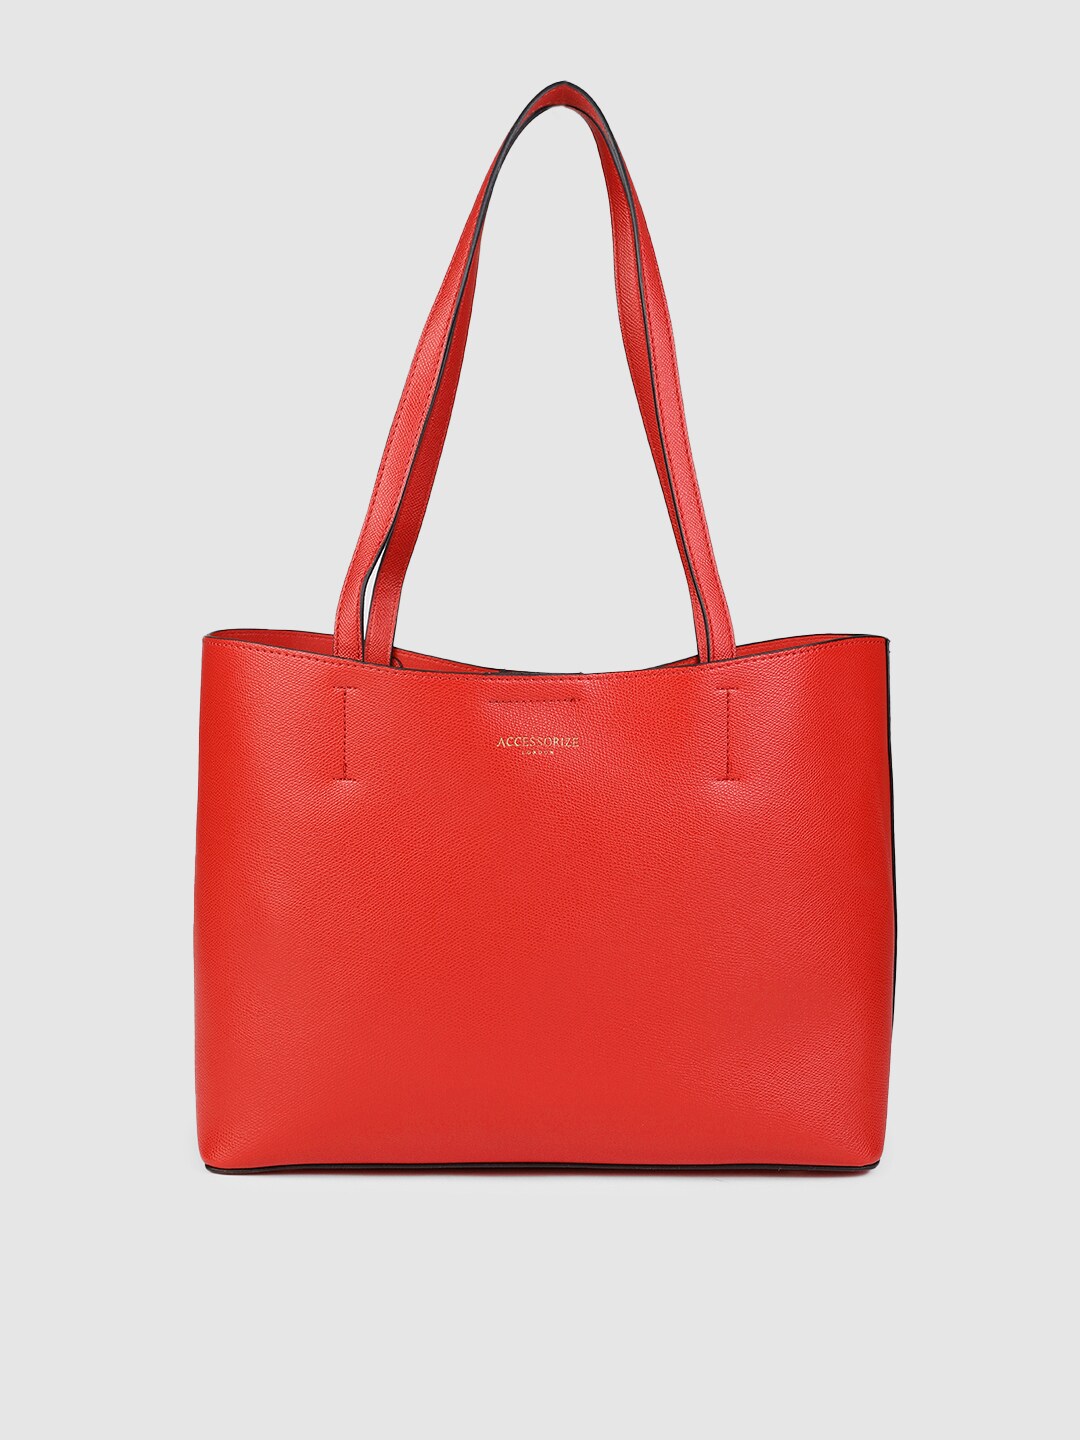 Accessorize Red Shopper Tote Bag Price in India